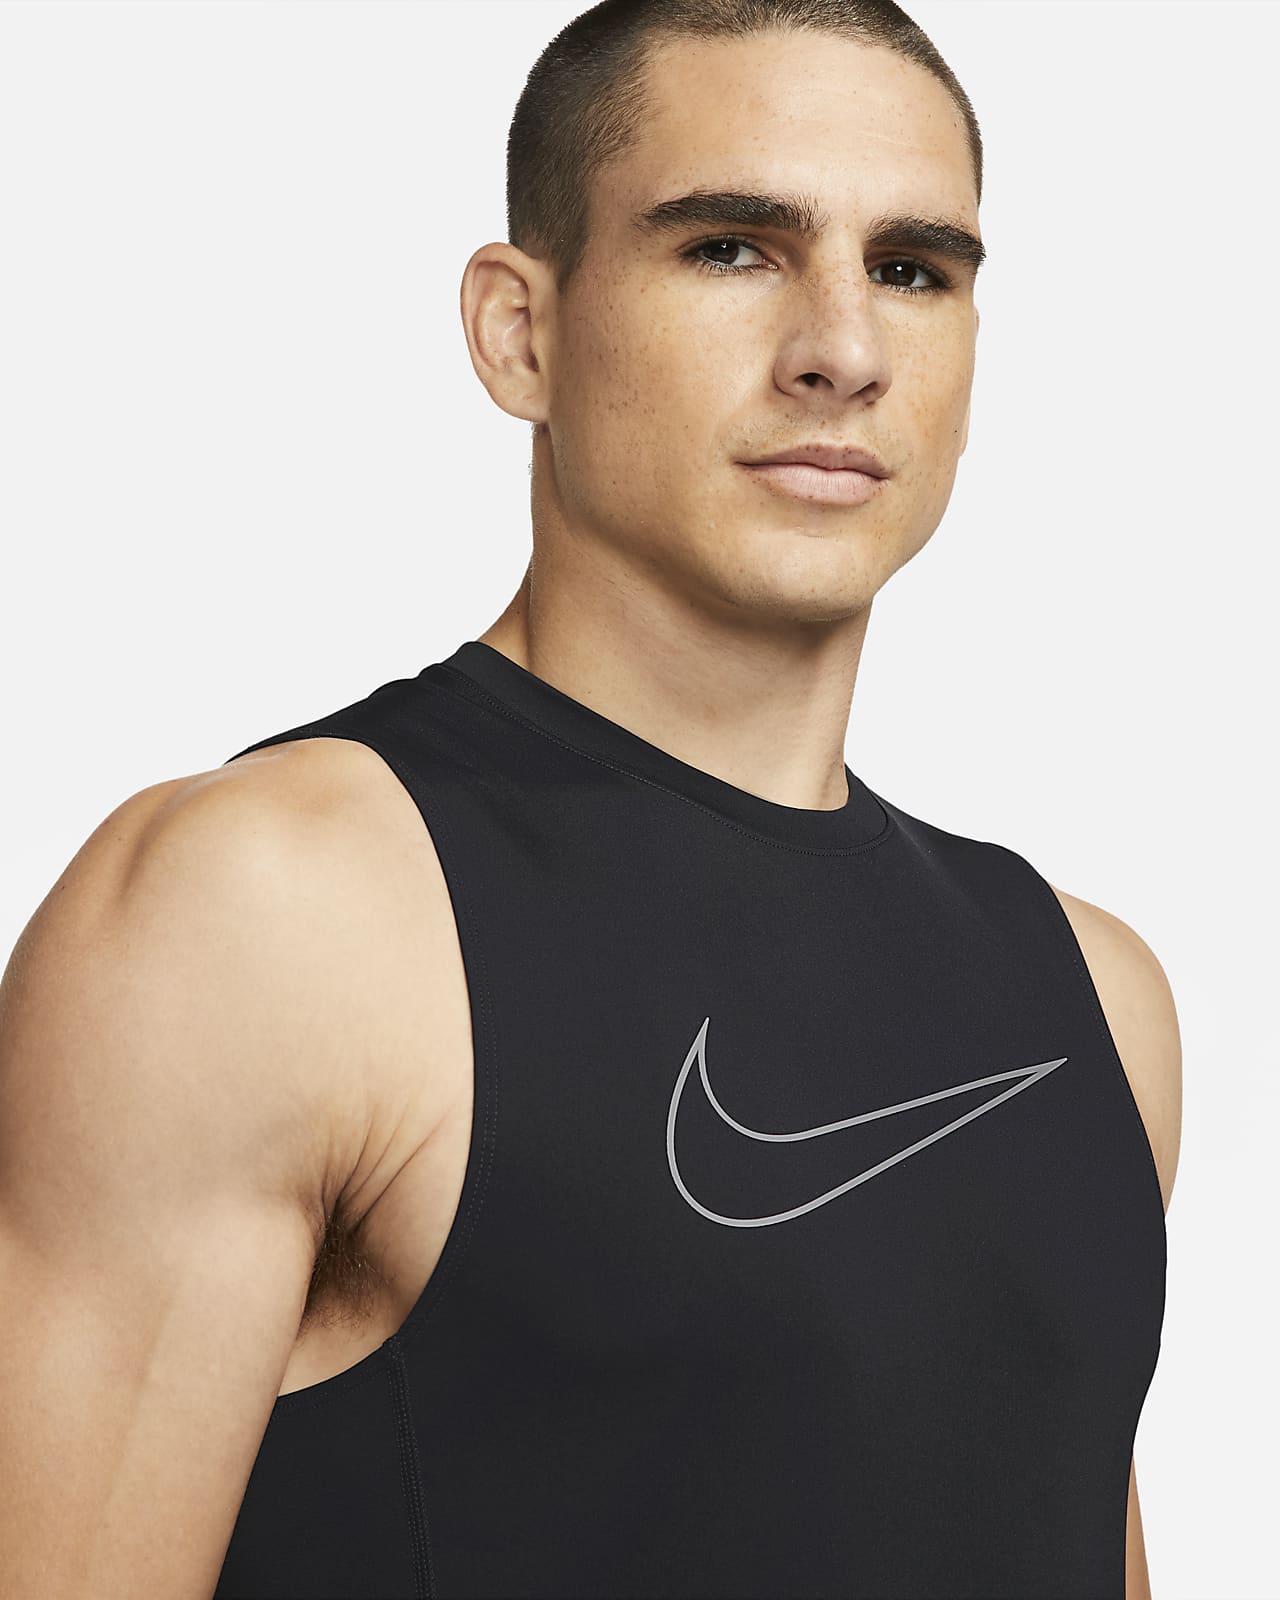 Nike Dri-FIT Men's Slim Sleeveless Top.